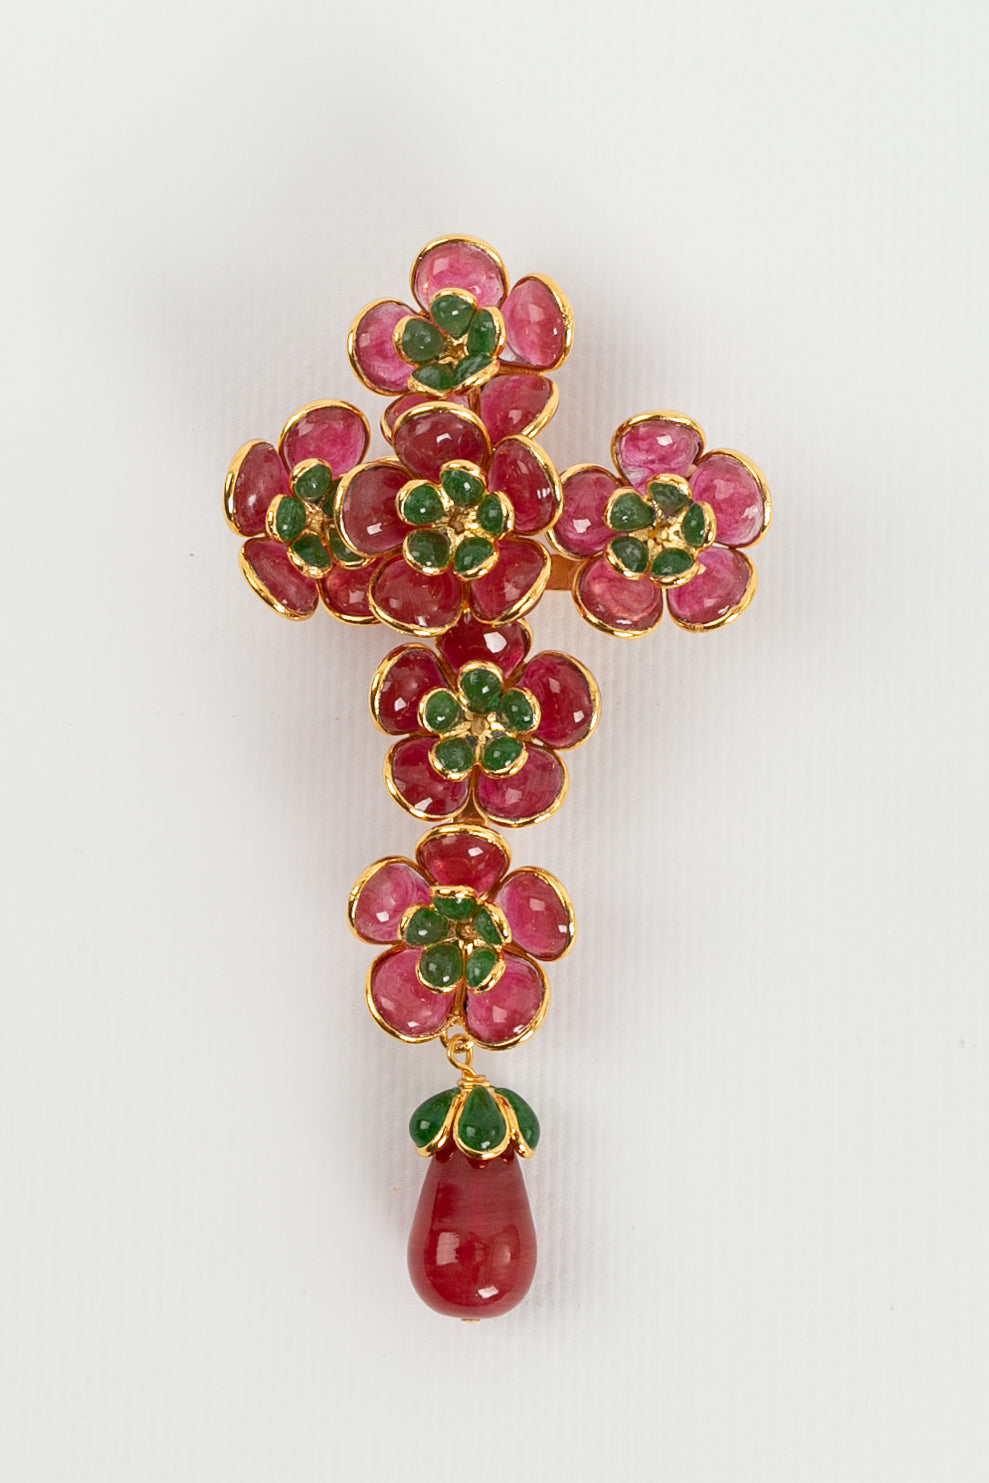 Augustine cross brooch with flowers